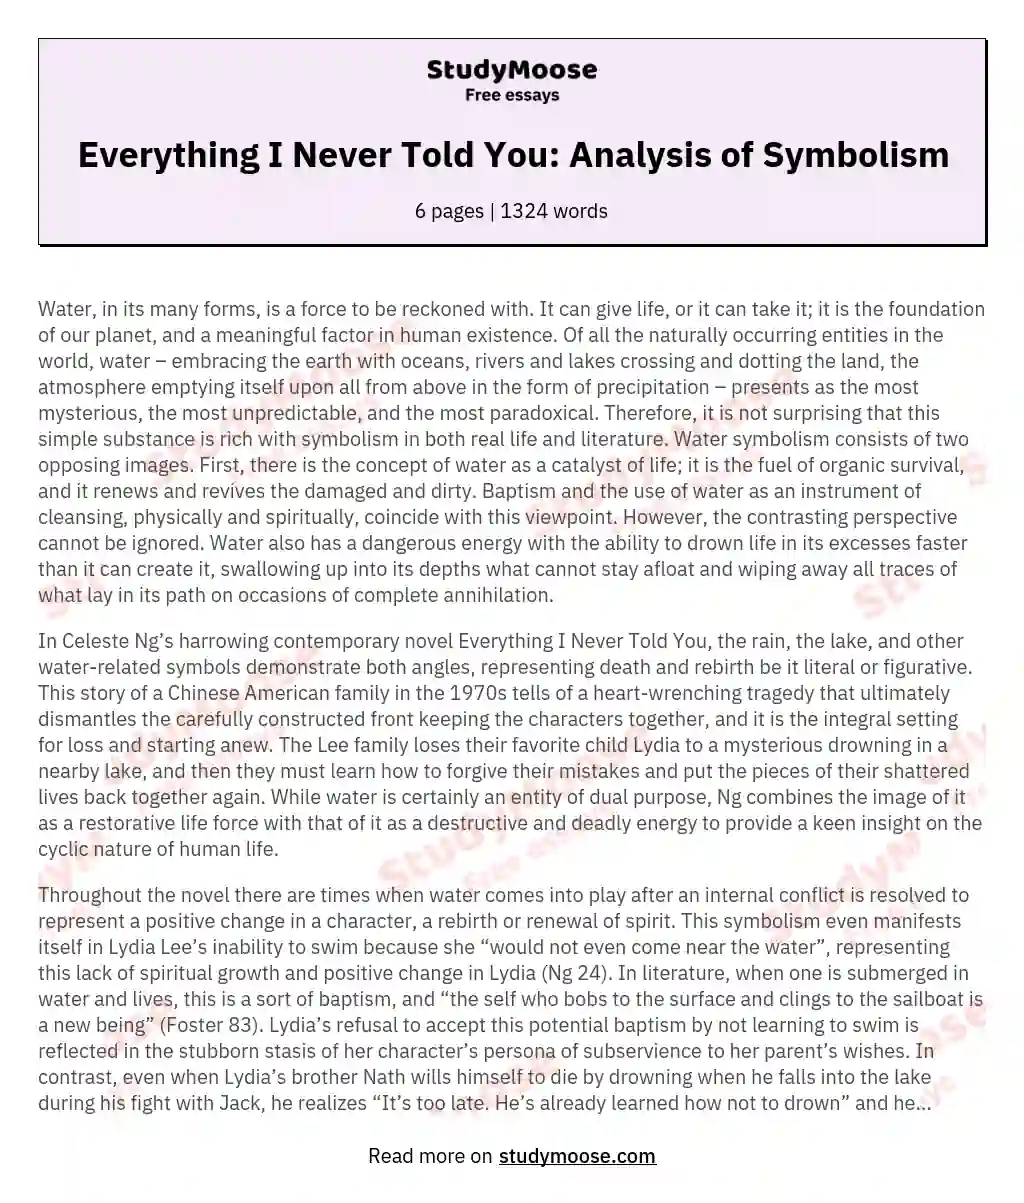 Everything I Never Told You: Analysis of Symbolism essay